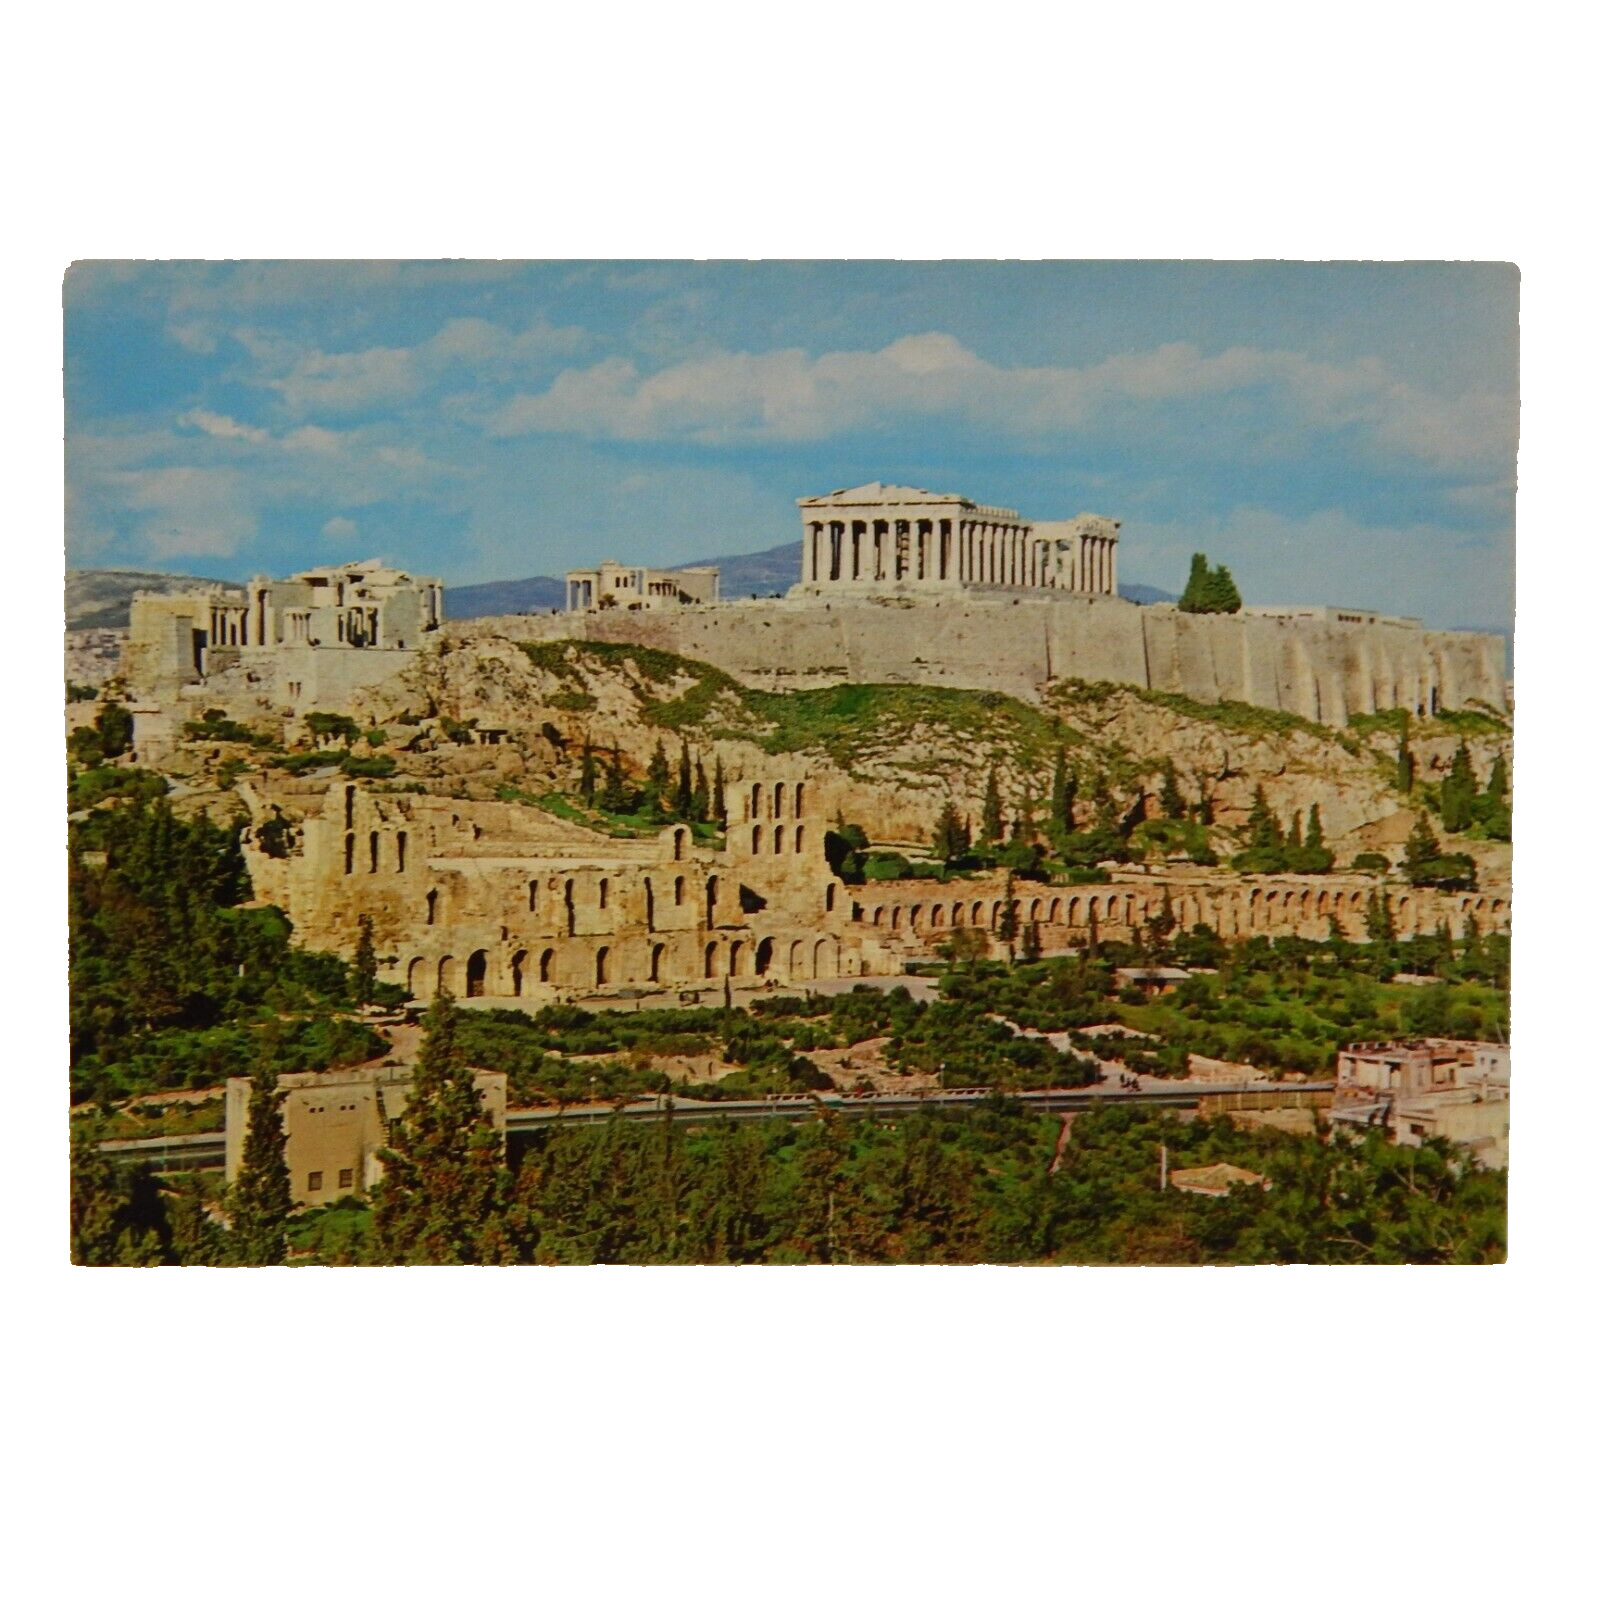 ATHEN GREECE VIEW OF THE ACROPOLIS